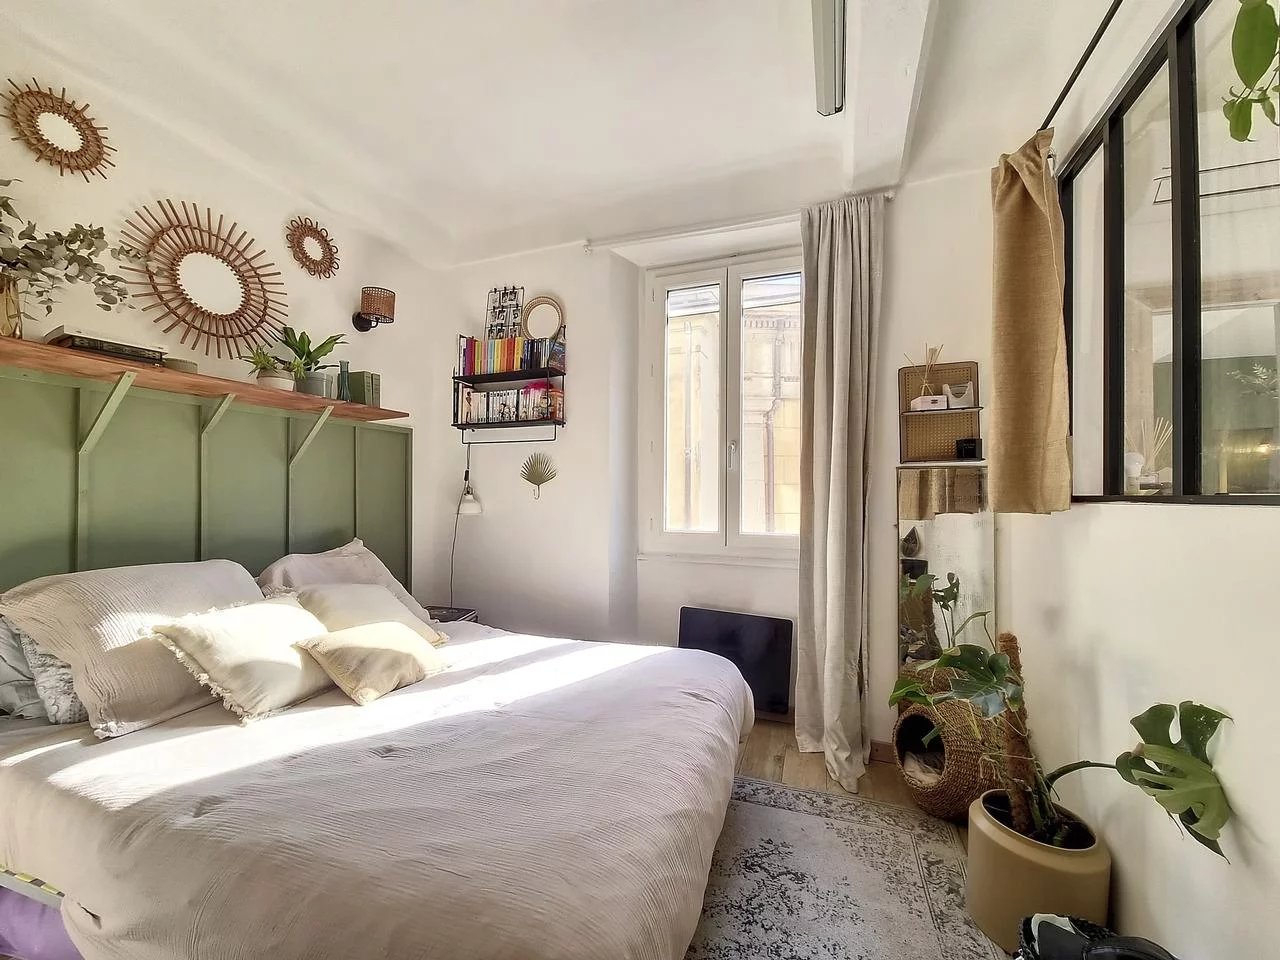 Sale Apartment - Nice Place Masséna